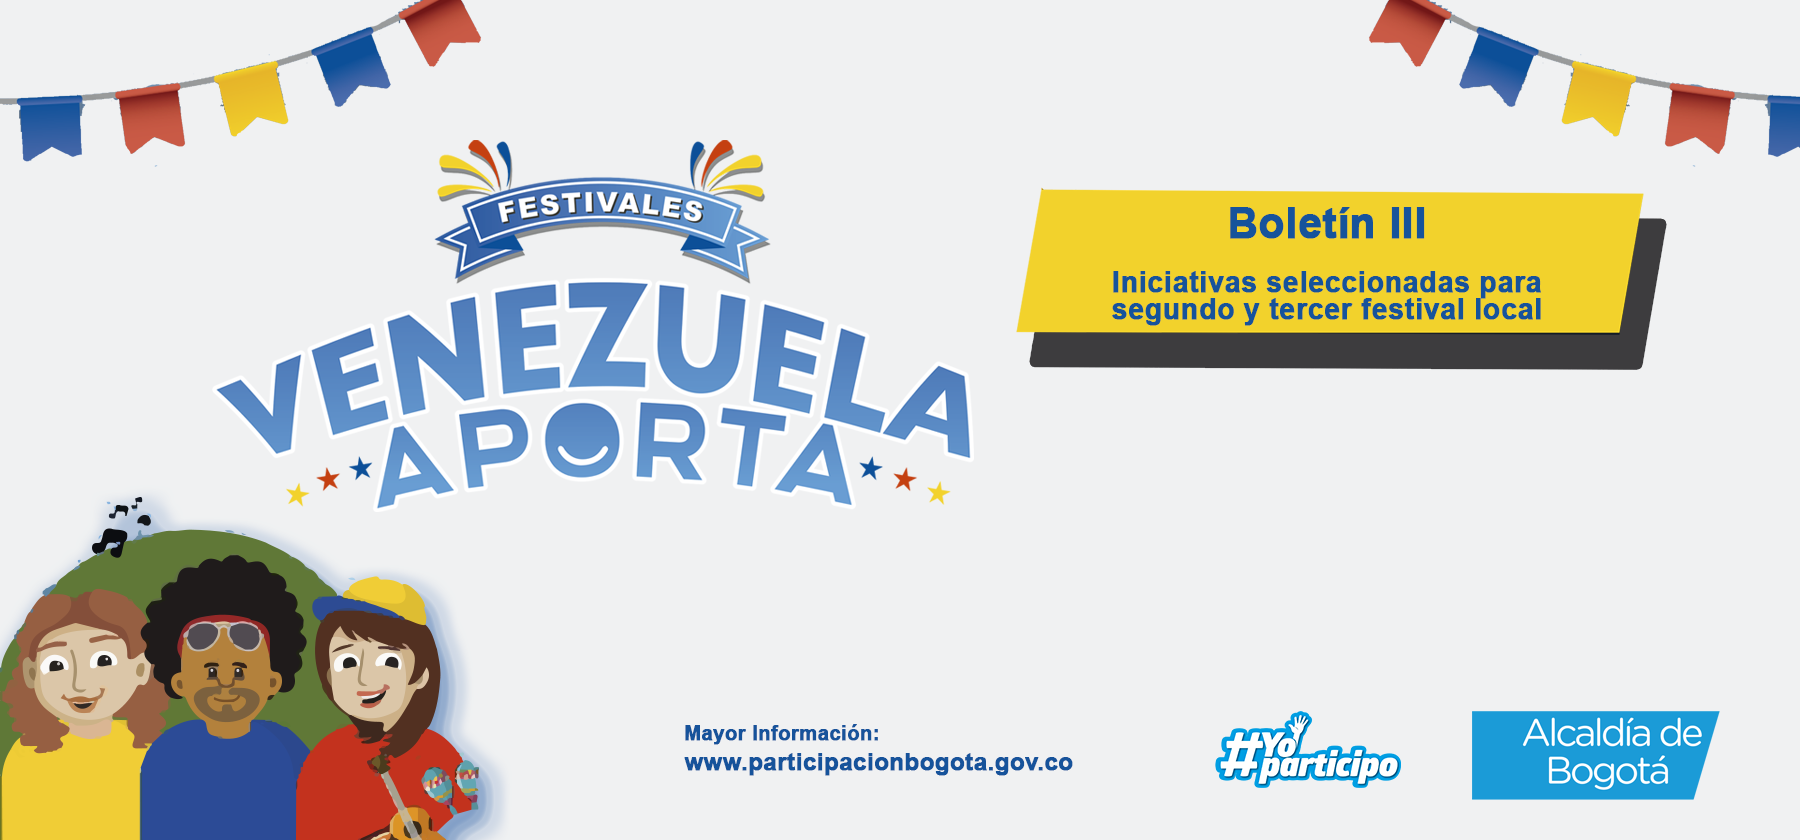 Afiche sobre el festival local venezuela Aporta